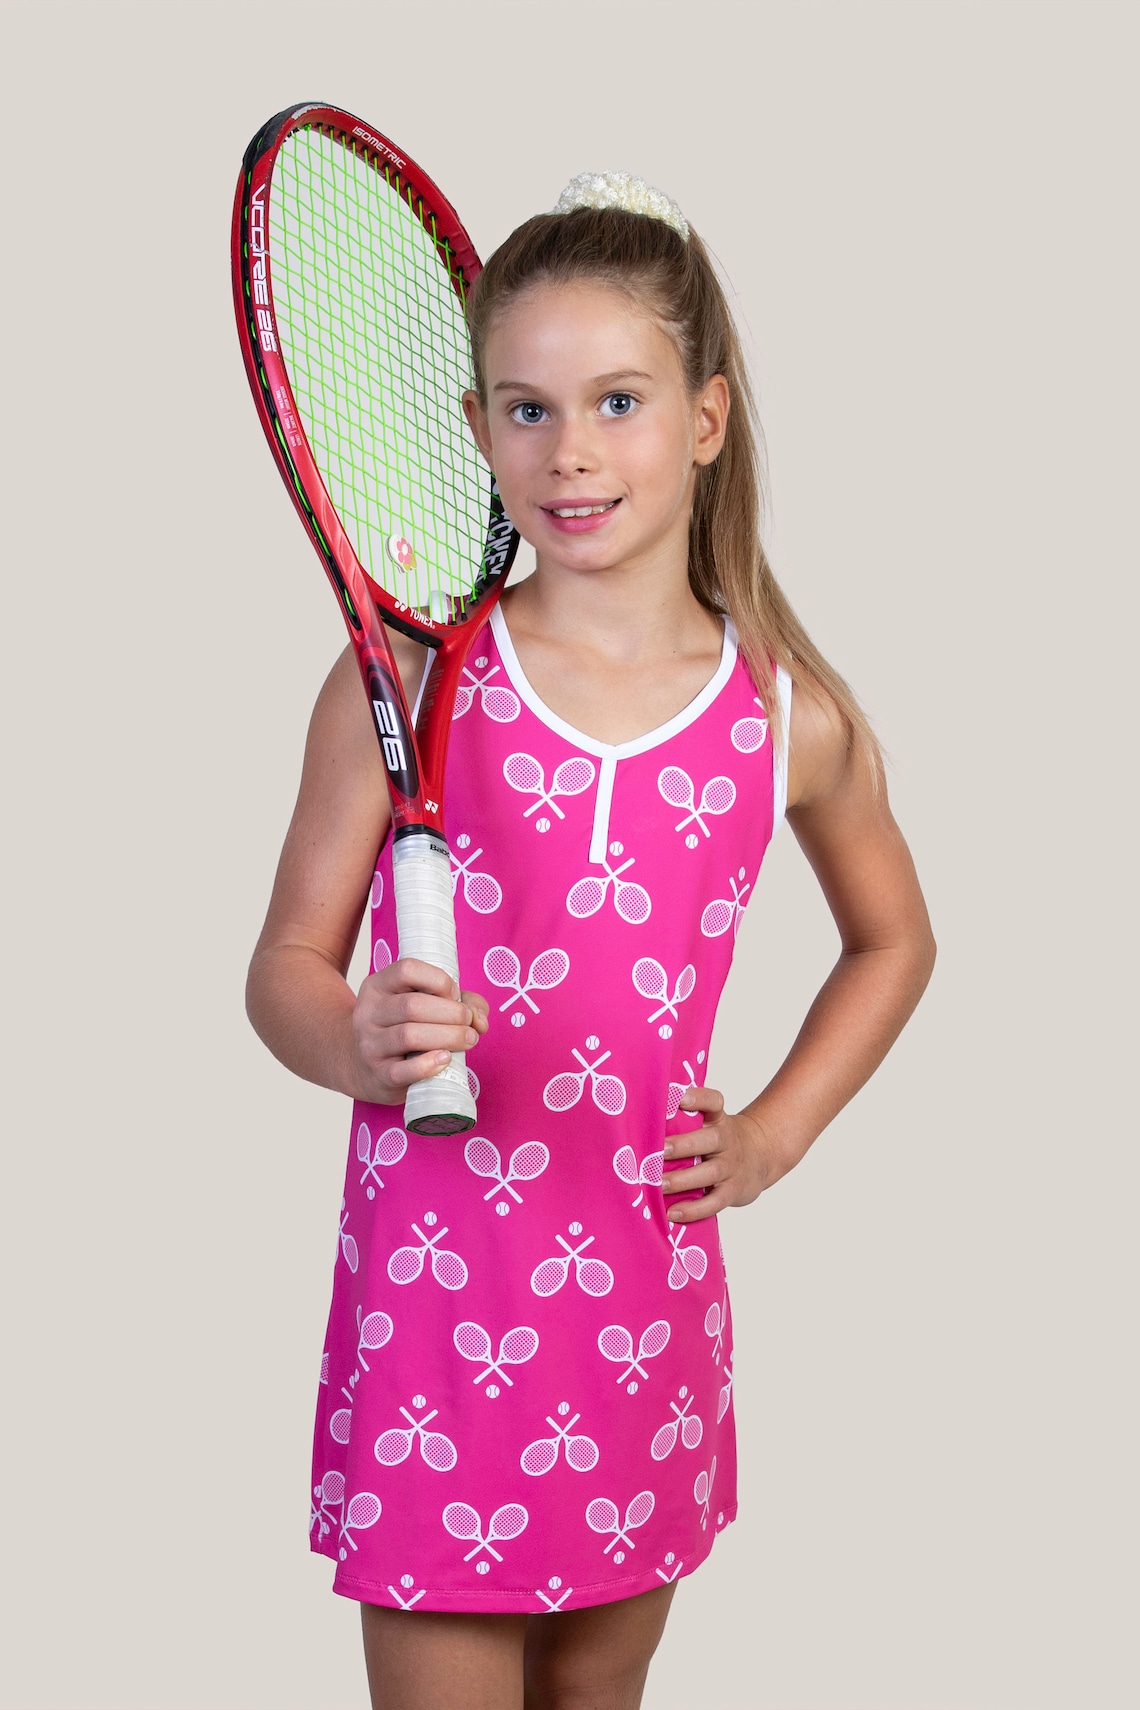 Smash It Tennis Dress for Kids. Tennis Clothing for Girls. Unique, Cute ...